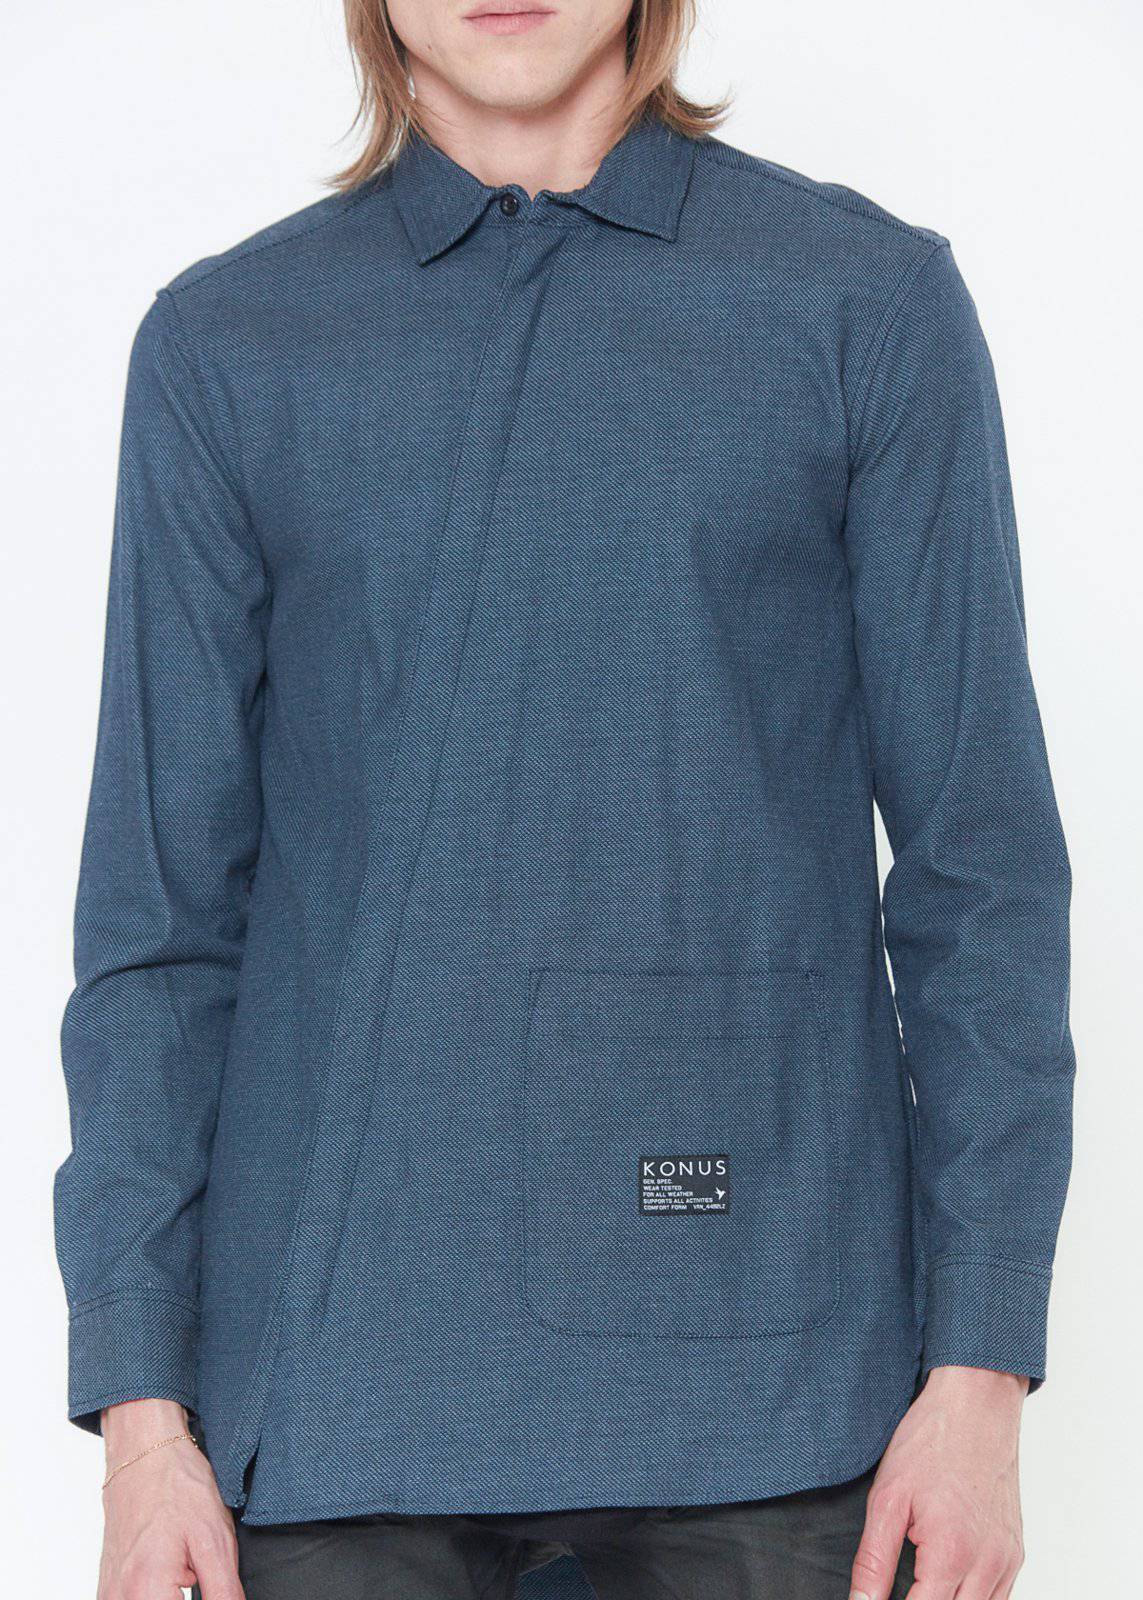 Konus Men's Asymmetrical Zip-up Shirt in Navy by Shop at Konus